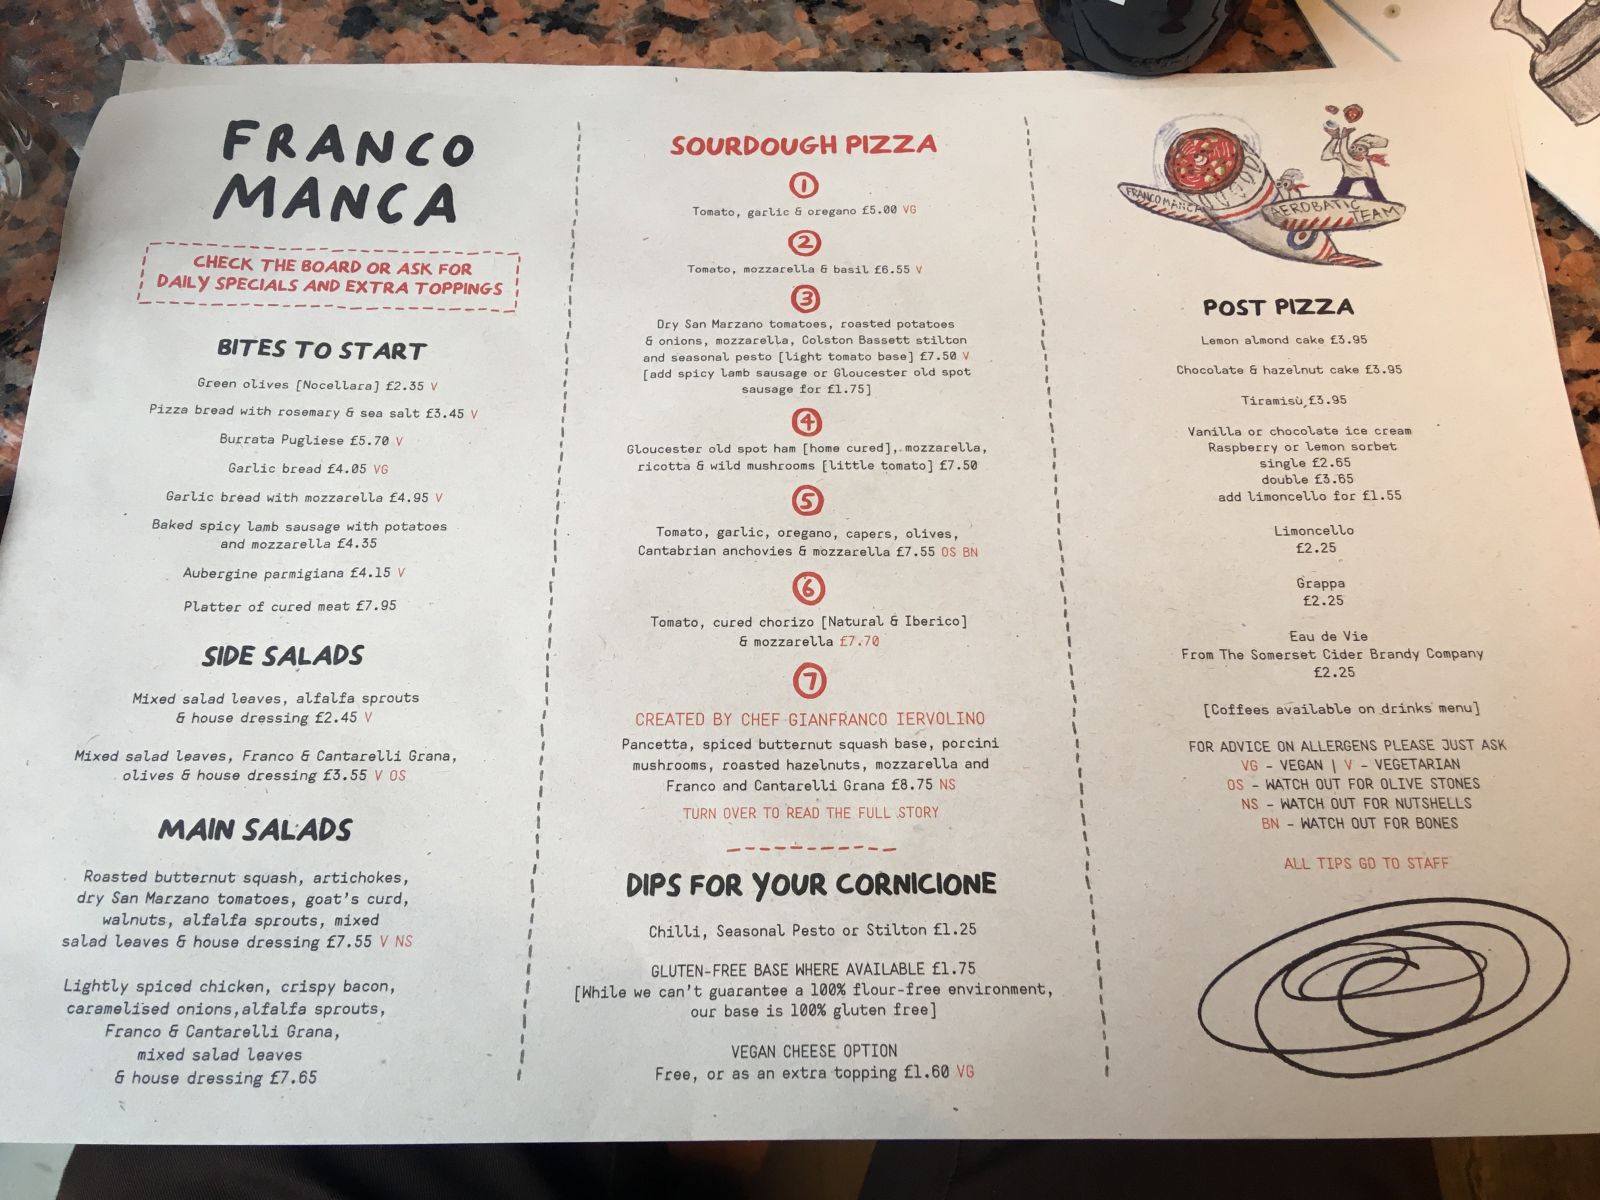 The menu at Franco Manca.